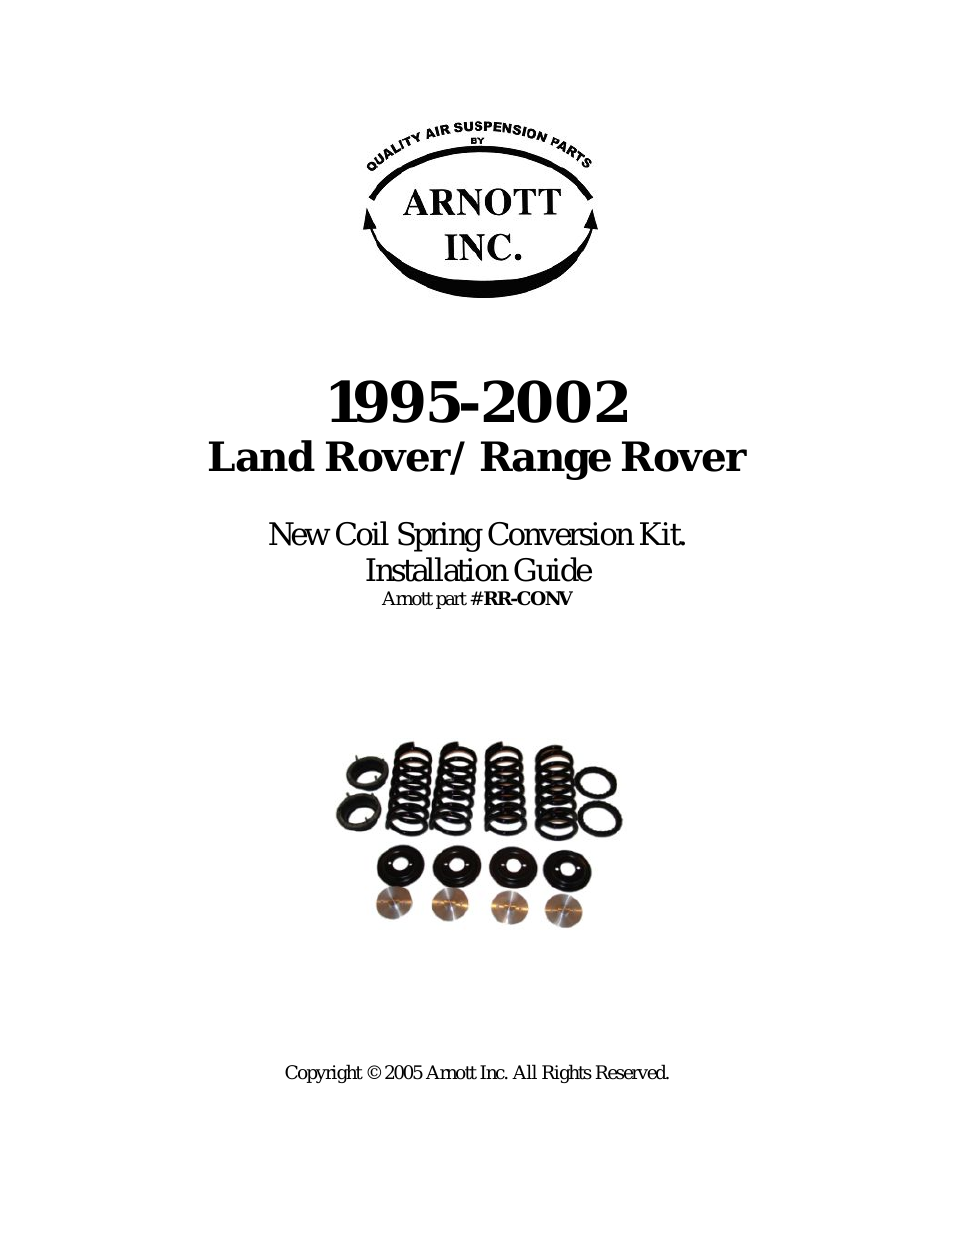 RR-CONV Land Rover/Range Rover Conversion Kit